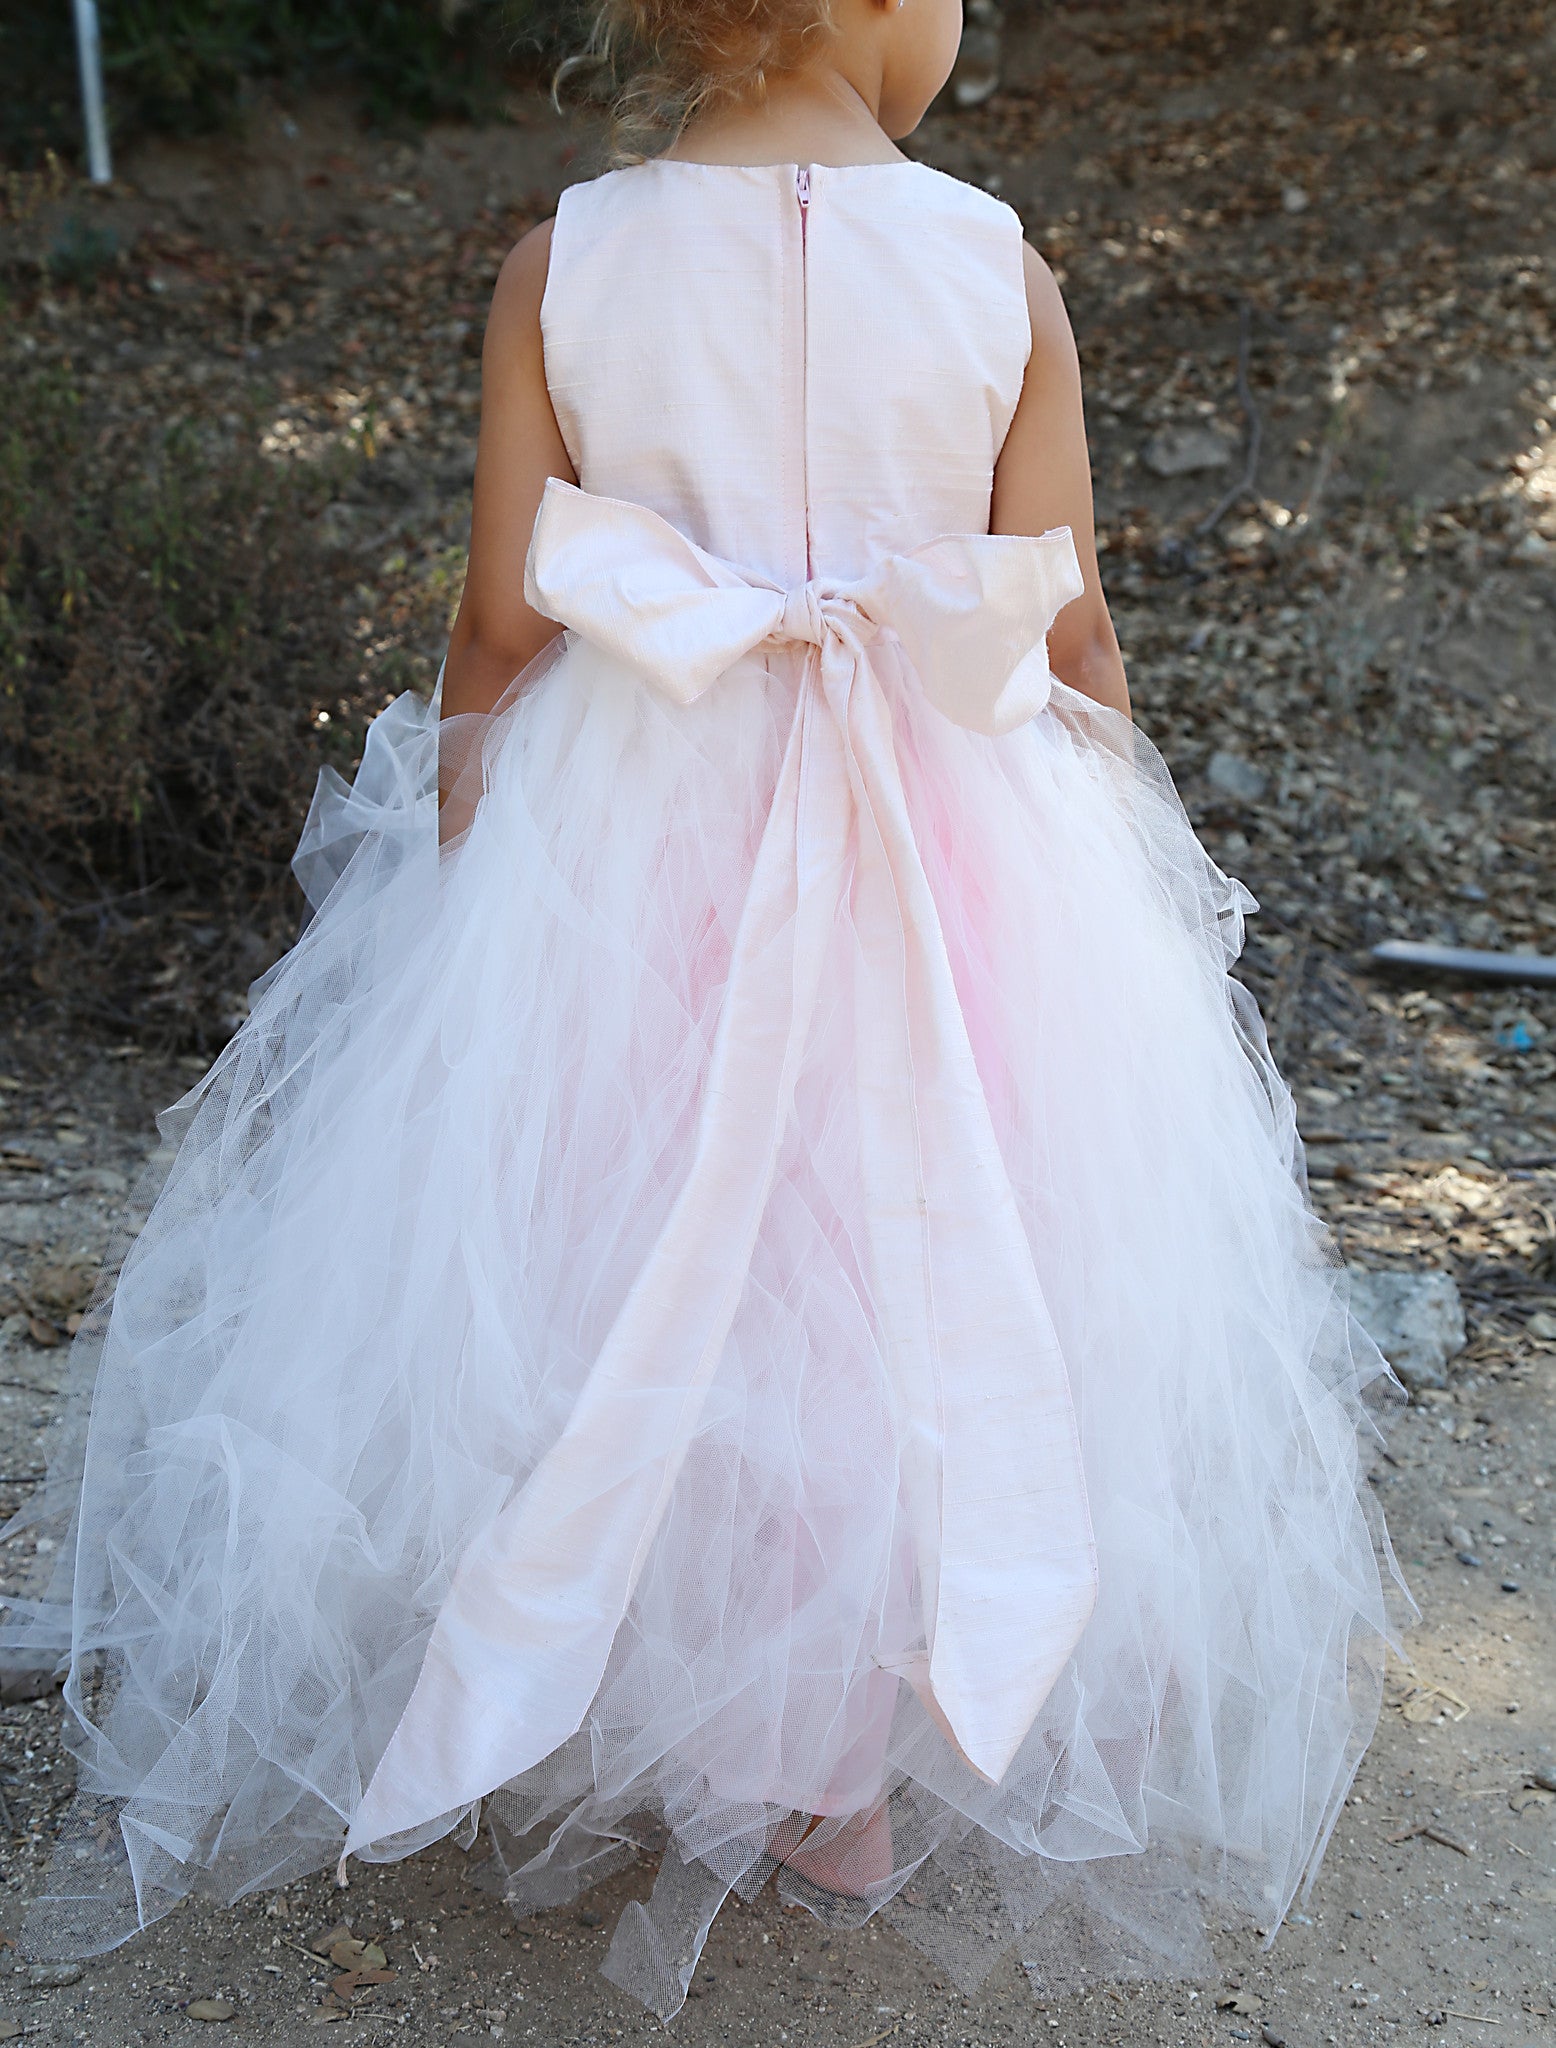 Blush Couture Tutu Dress-Bridal-Flowergirl-Photoprop-Isabella - ElenaCollection
 - 7